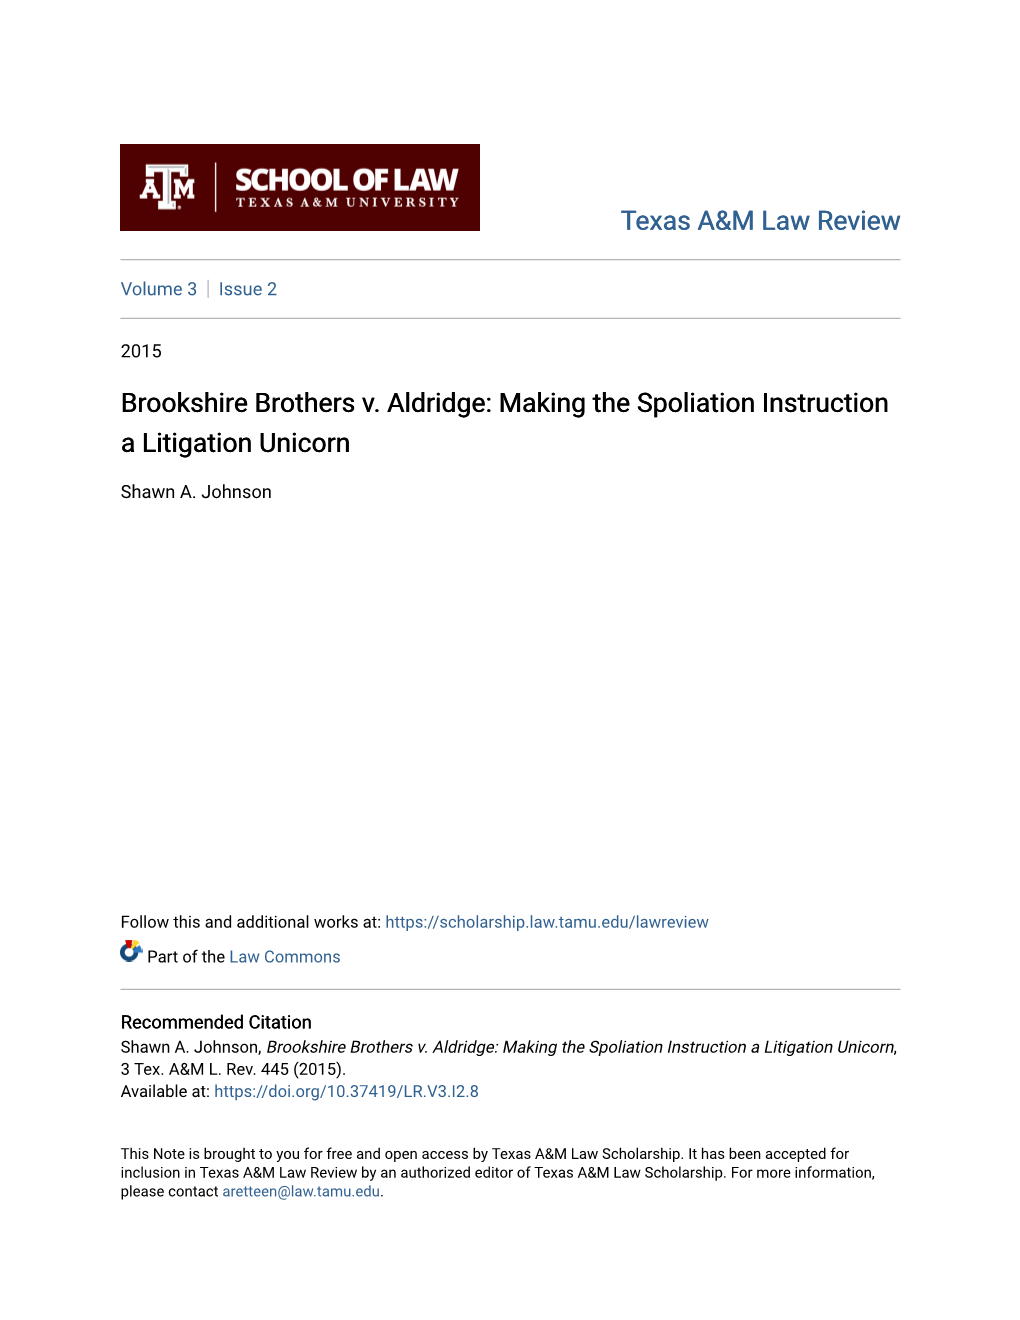 Brookshire Brothers V. Aldridge: Making the Spoliation Instruction a Litigation Unicorn